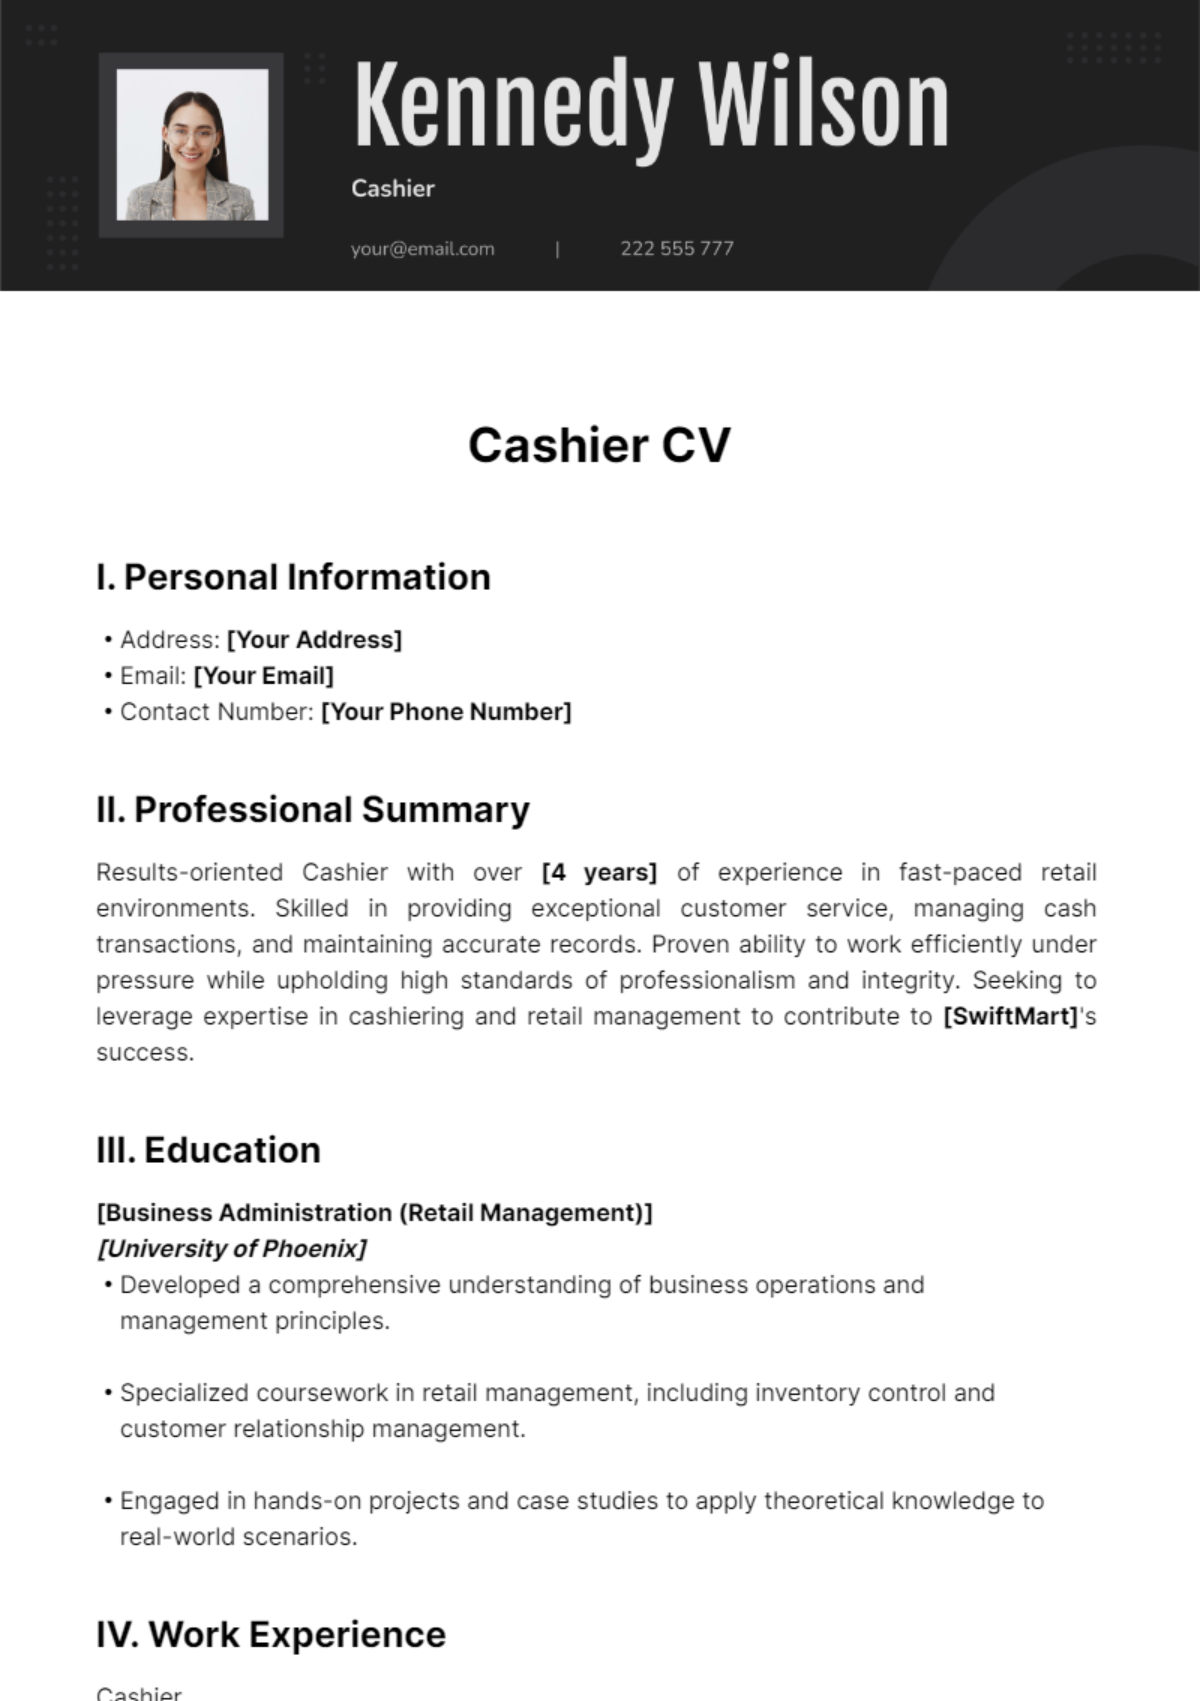 Cashier CV Template